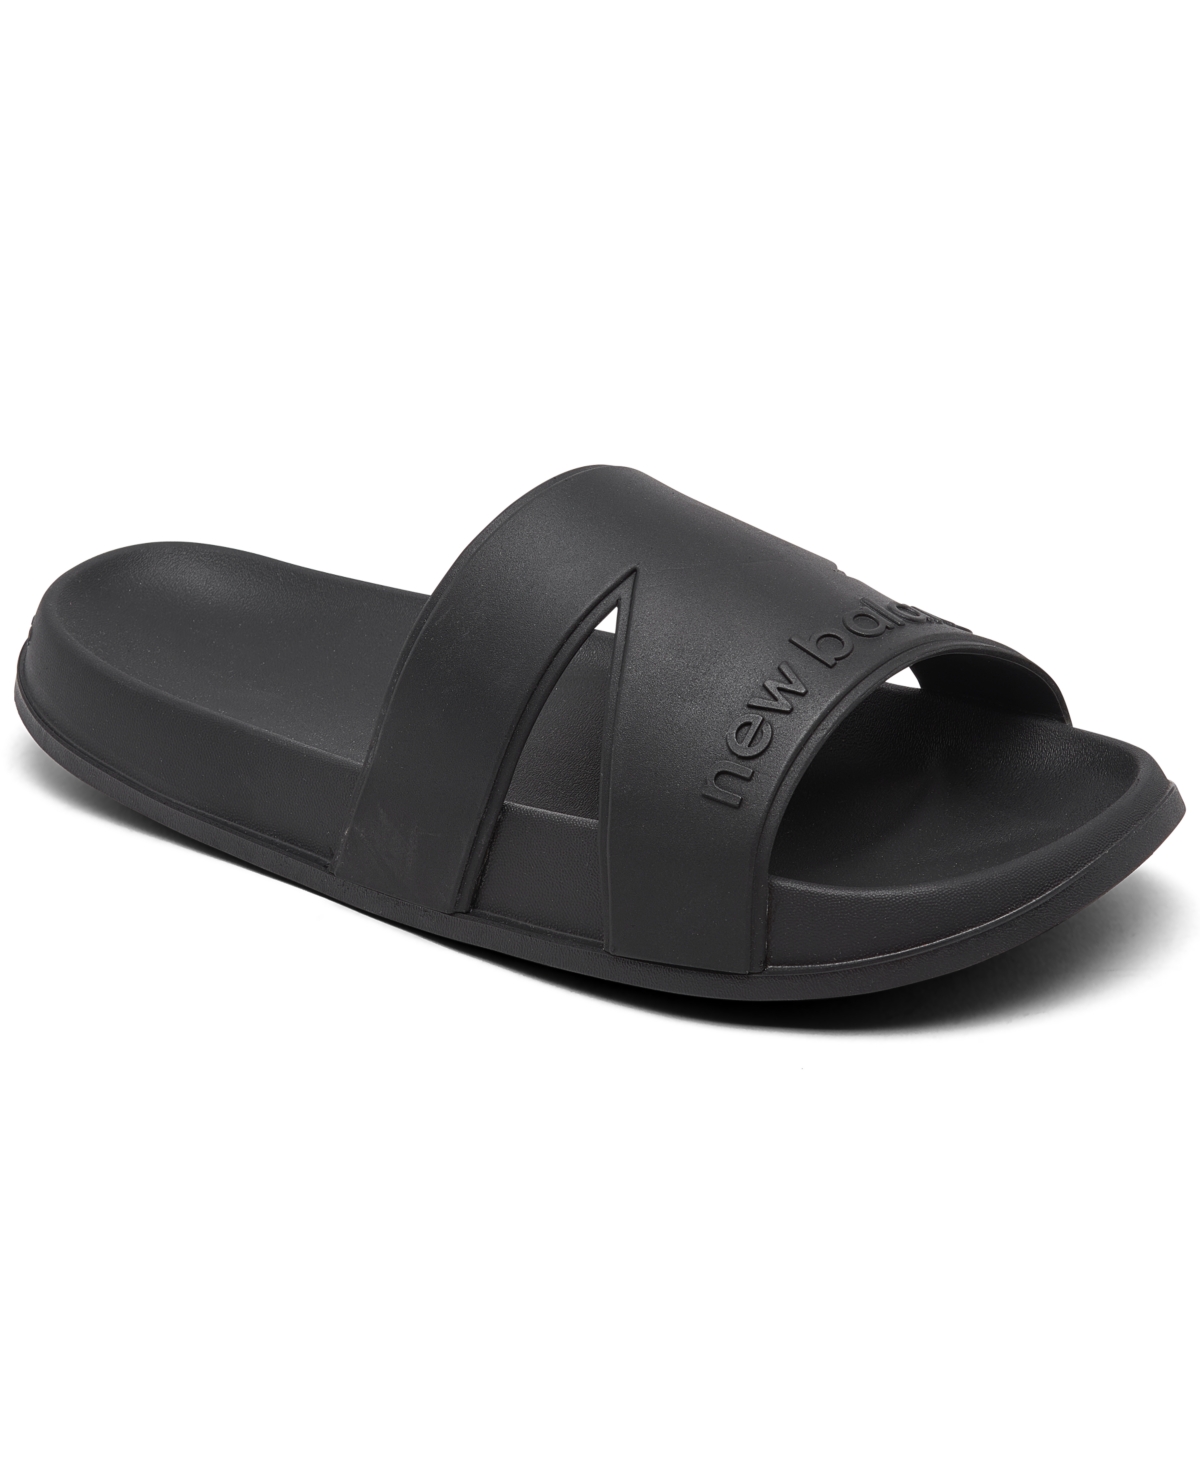 Men's 200 Slide Sandals from Finish Line - Black